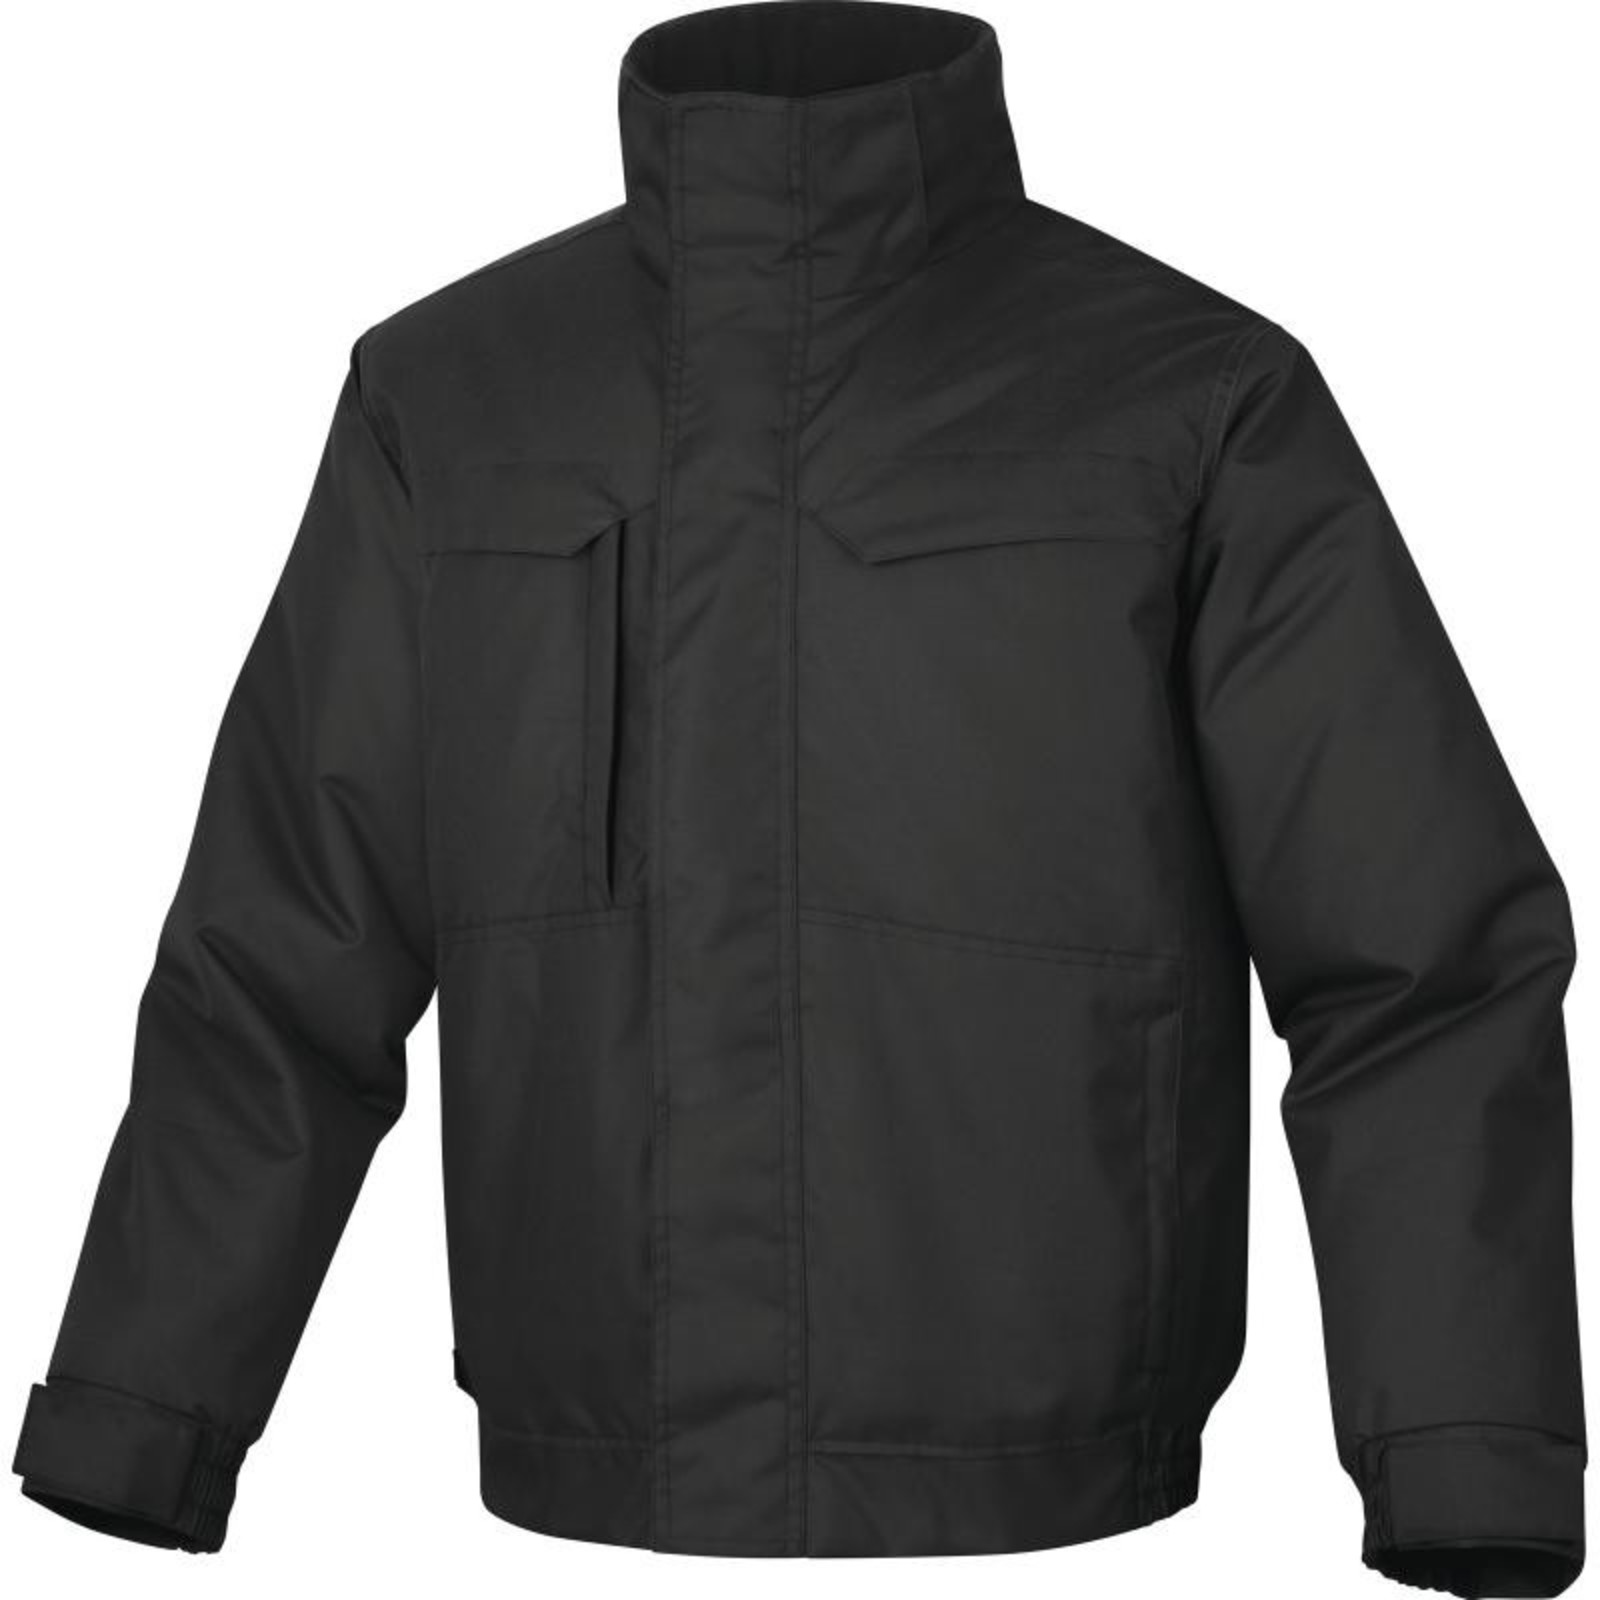 Zimná pánska bunda Delta Plus Northwood3 - veľkosť: 3XL, farba: čierna